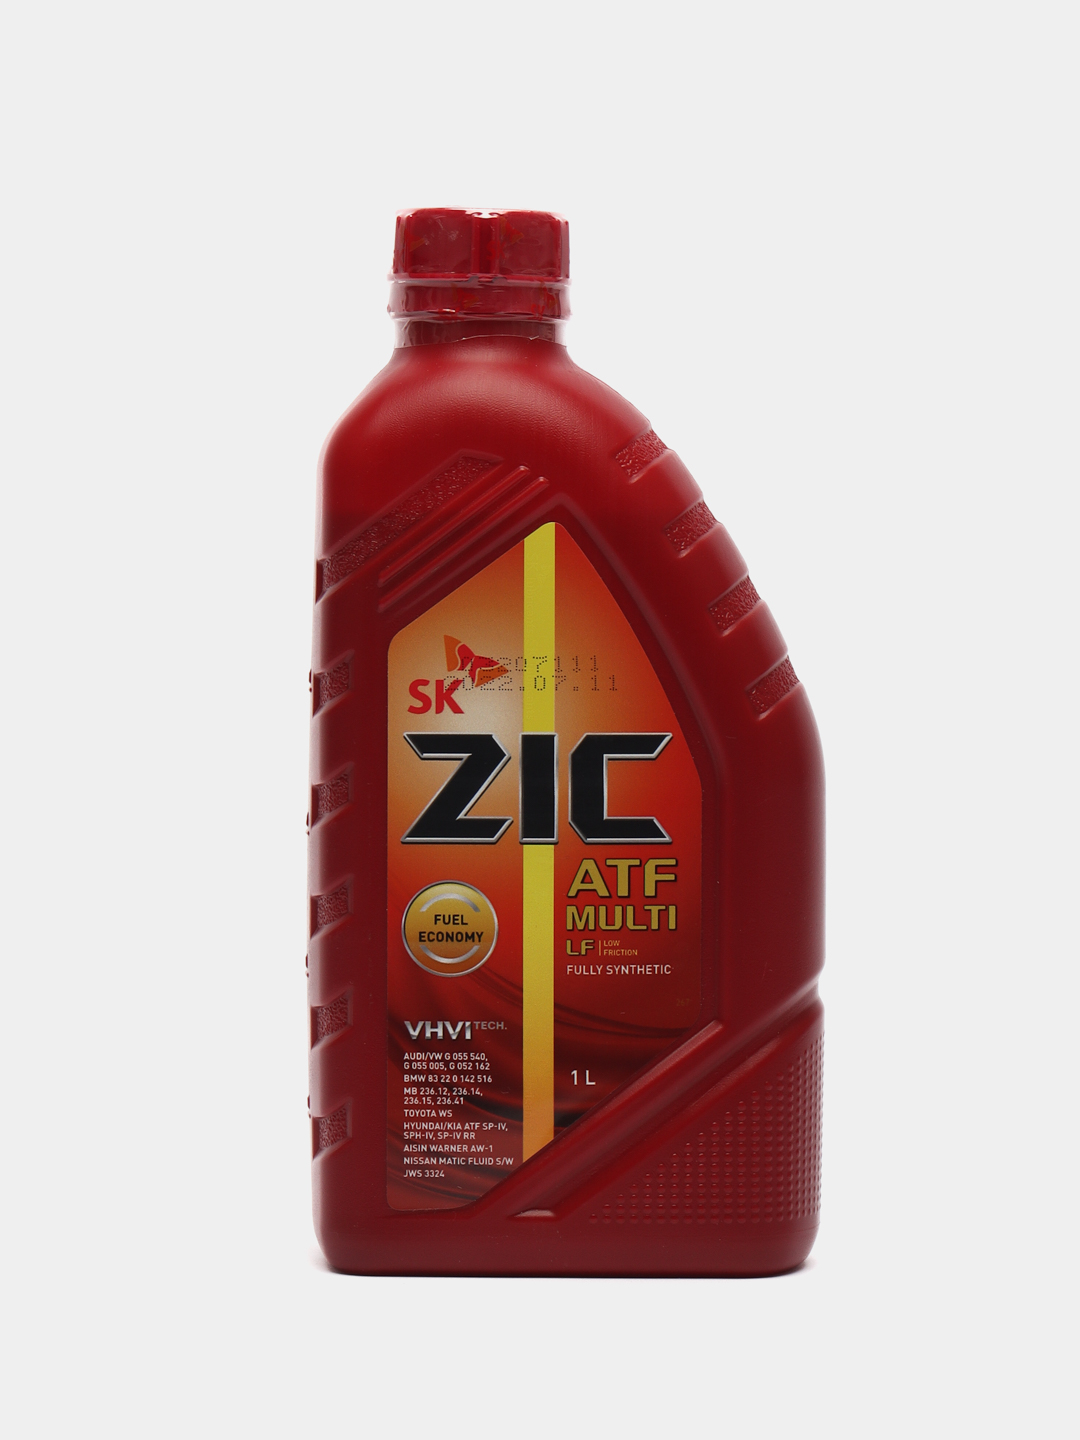 ZIC ATF Multi LF. ZIC ATF Multi LF цвет. Масло ZIC ATF Multi класс вязкости. ZIC ATF Multi какого цвета.